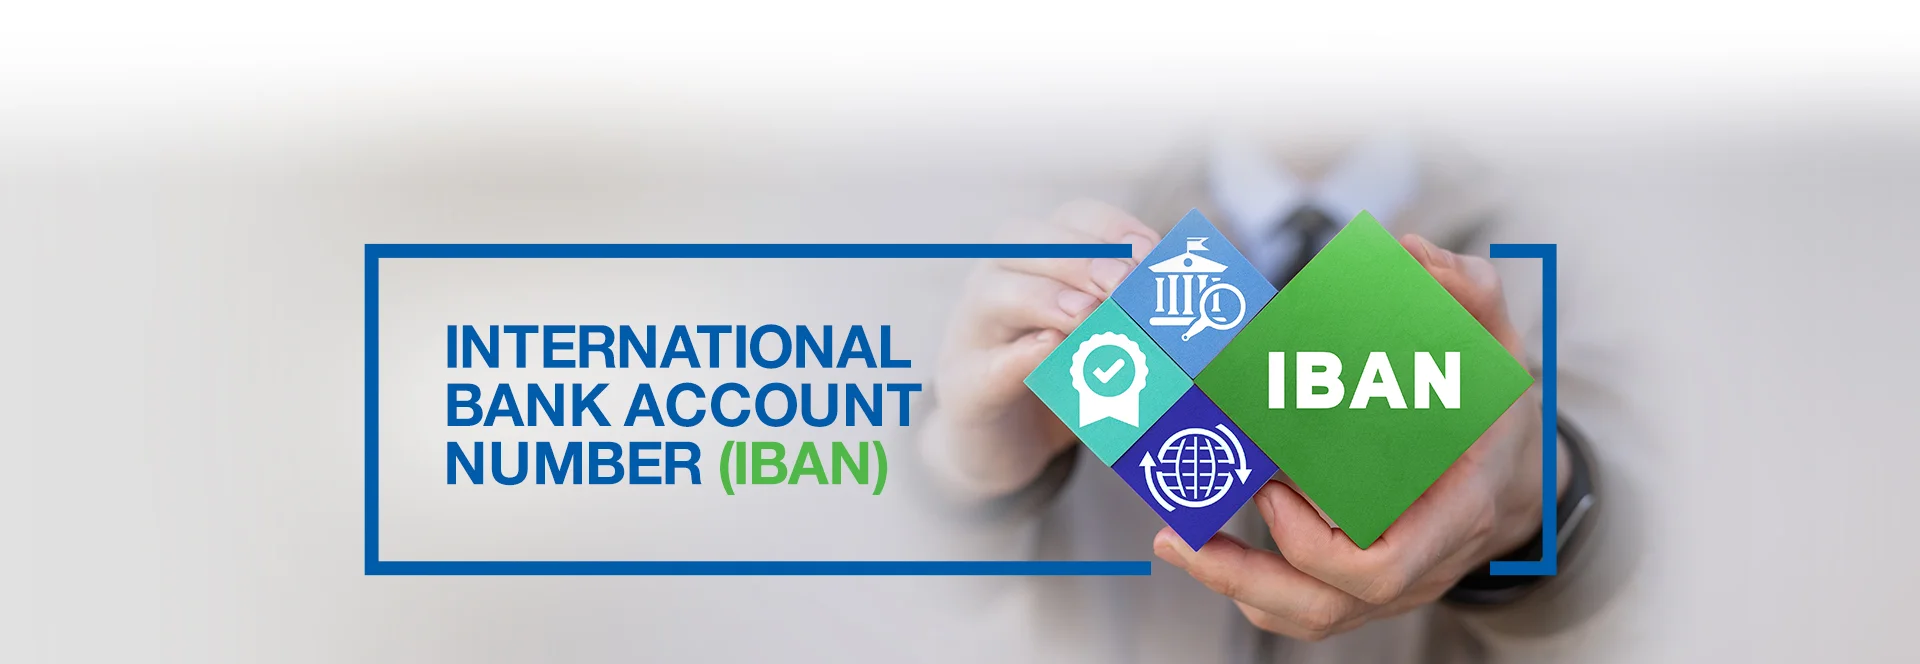 International Bank Account Number (IBAN)